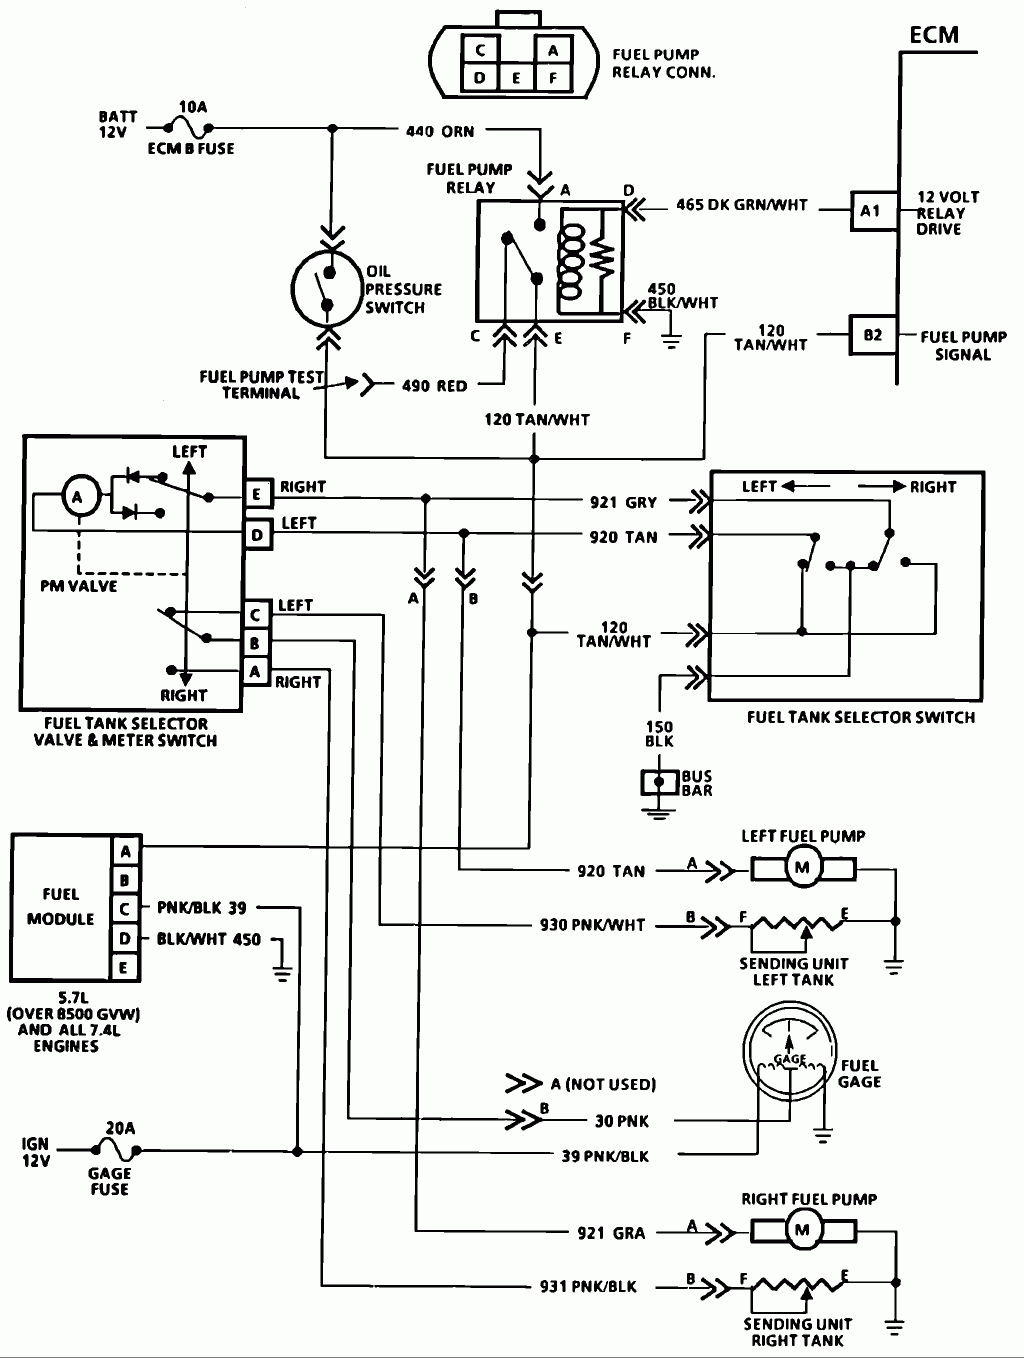 1990 Chevrolet Fuel Tank Wiring - Wiring Diagrams Click - Electric Fuel Pump Wiring Diagram